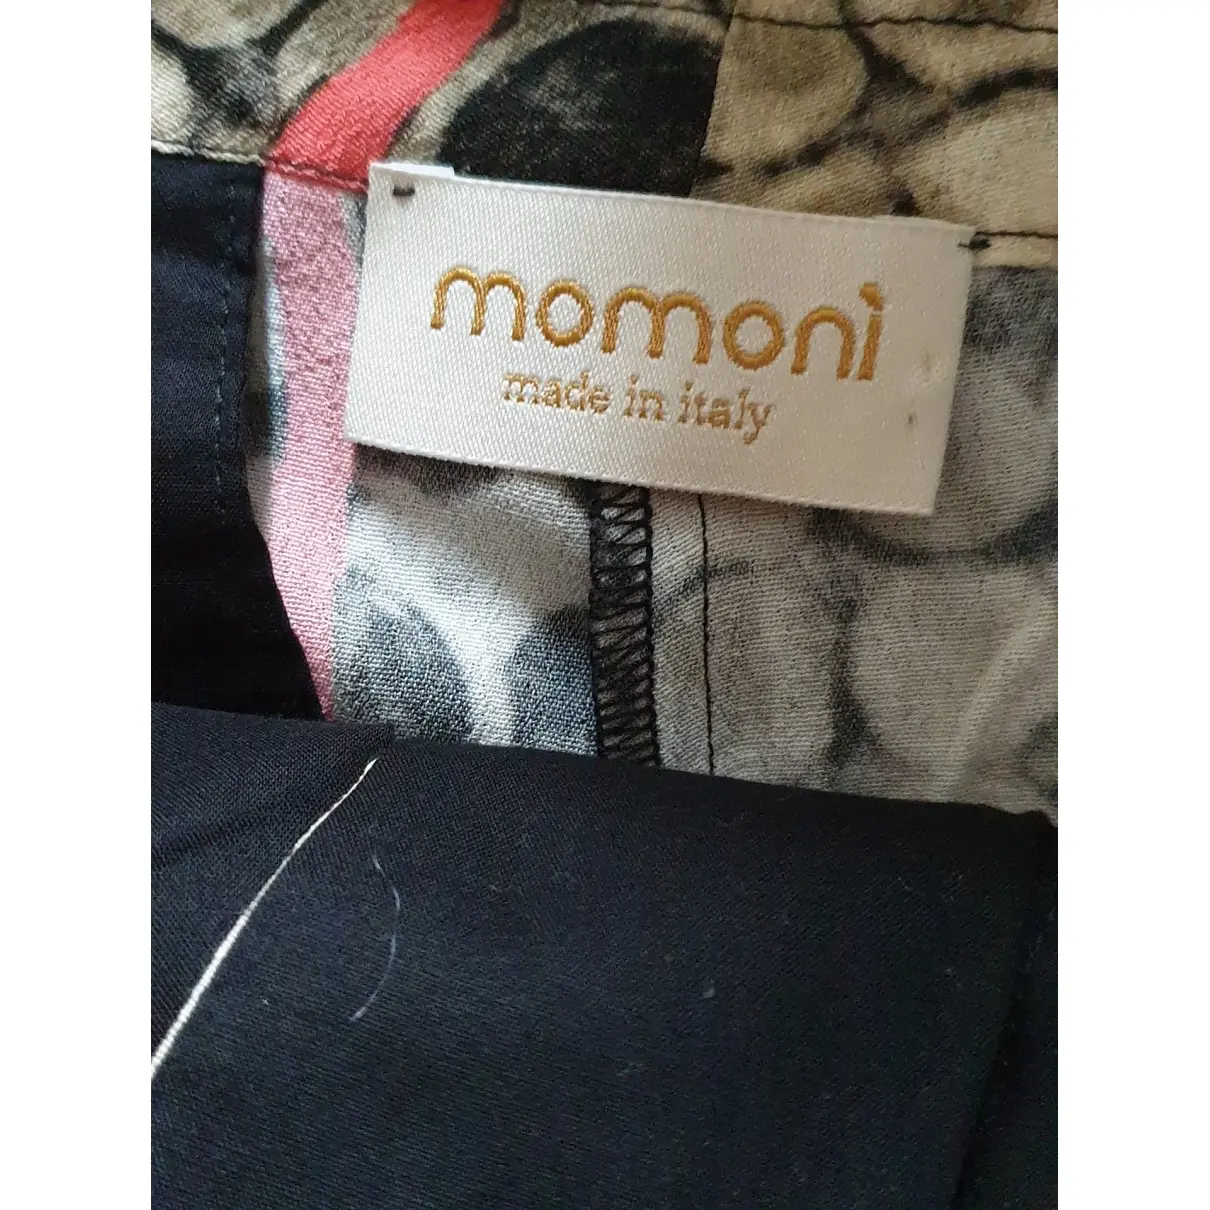 Buy Momoni Large pants online